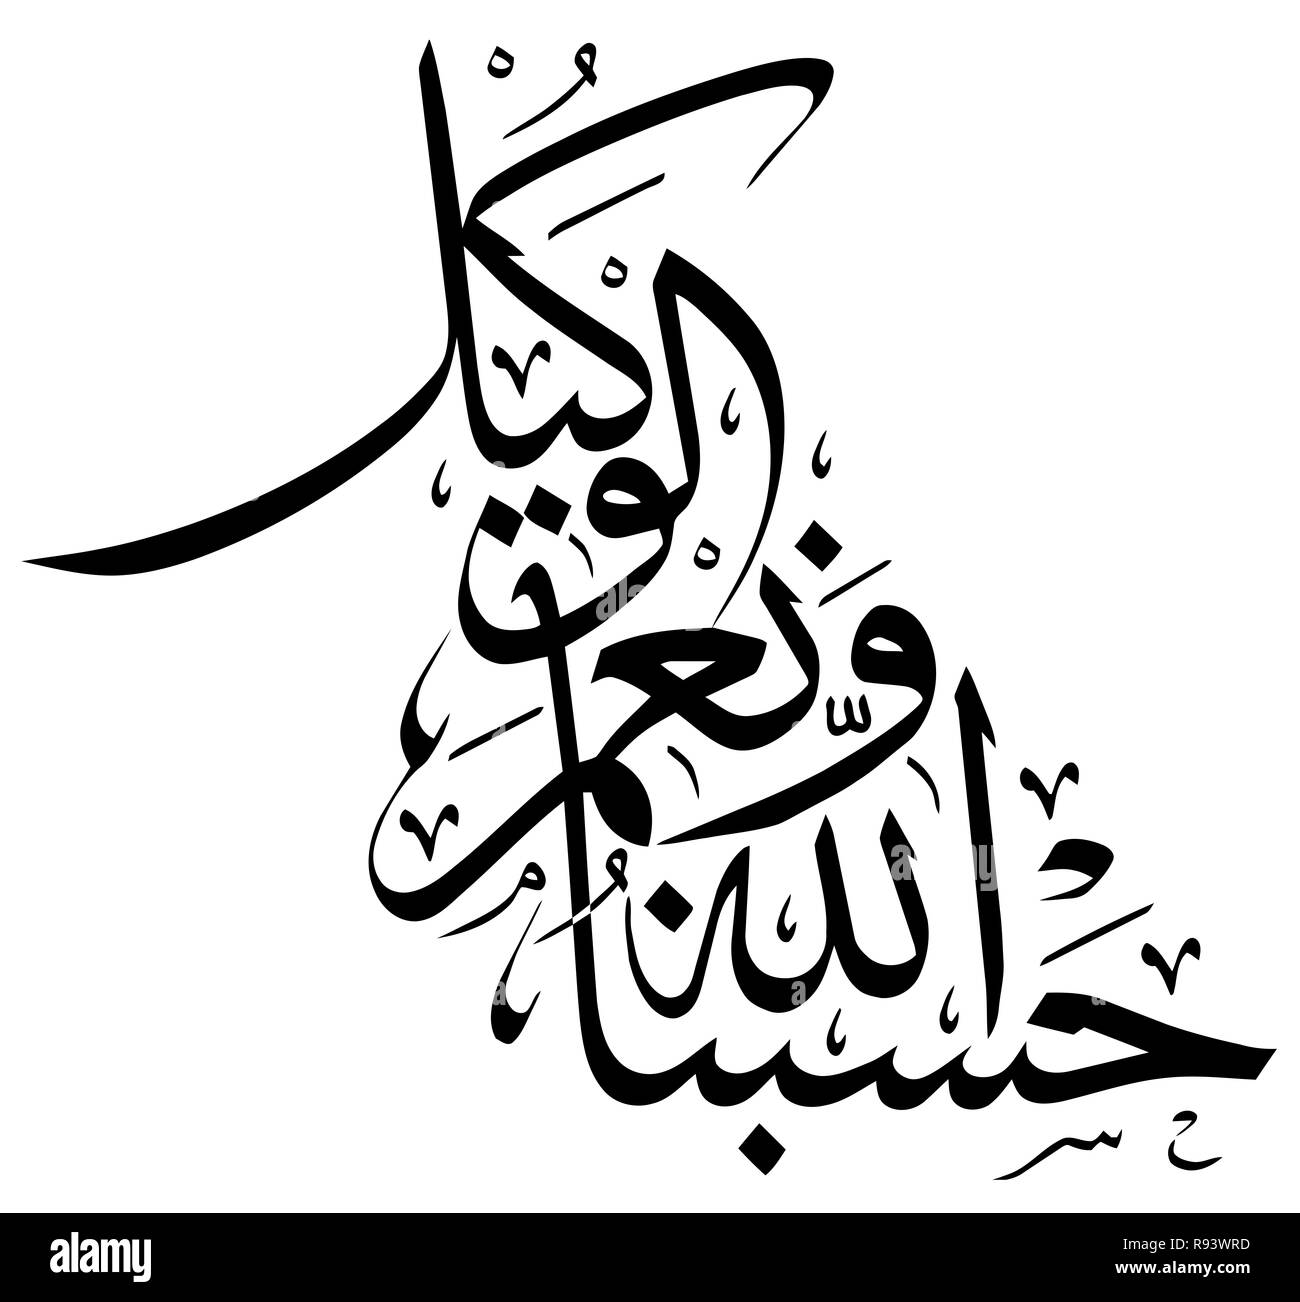 quran calligraphy islamic holy black religious illustration Stock Photo